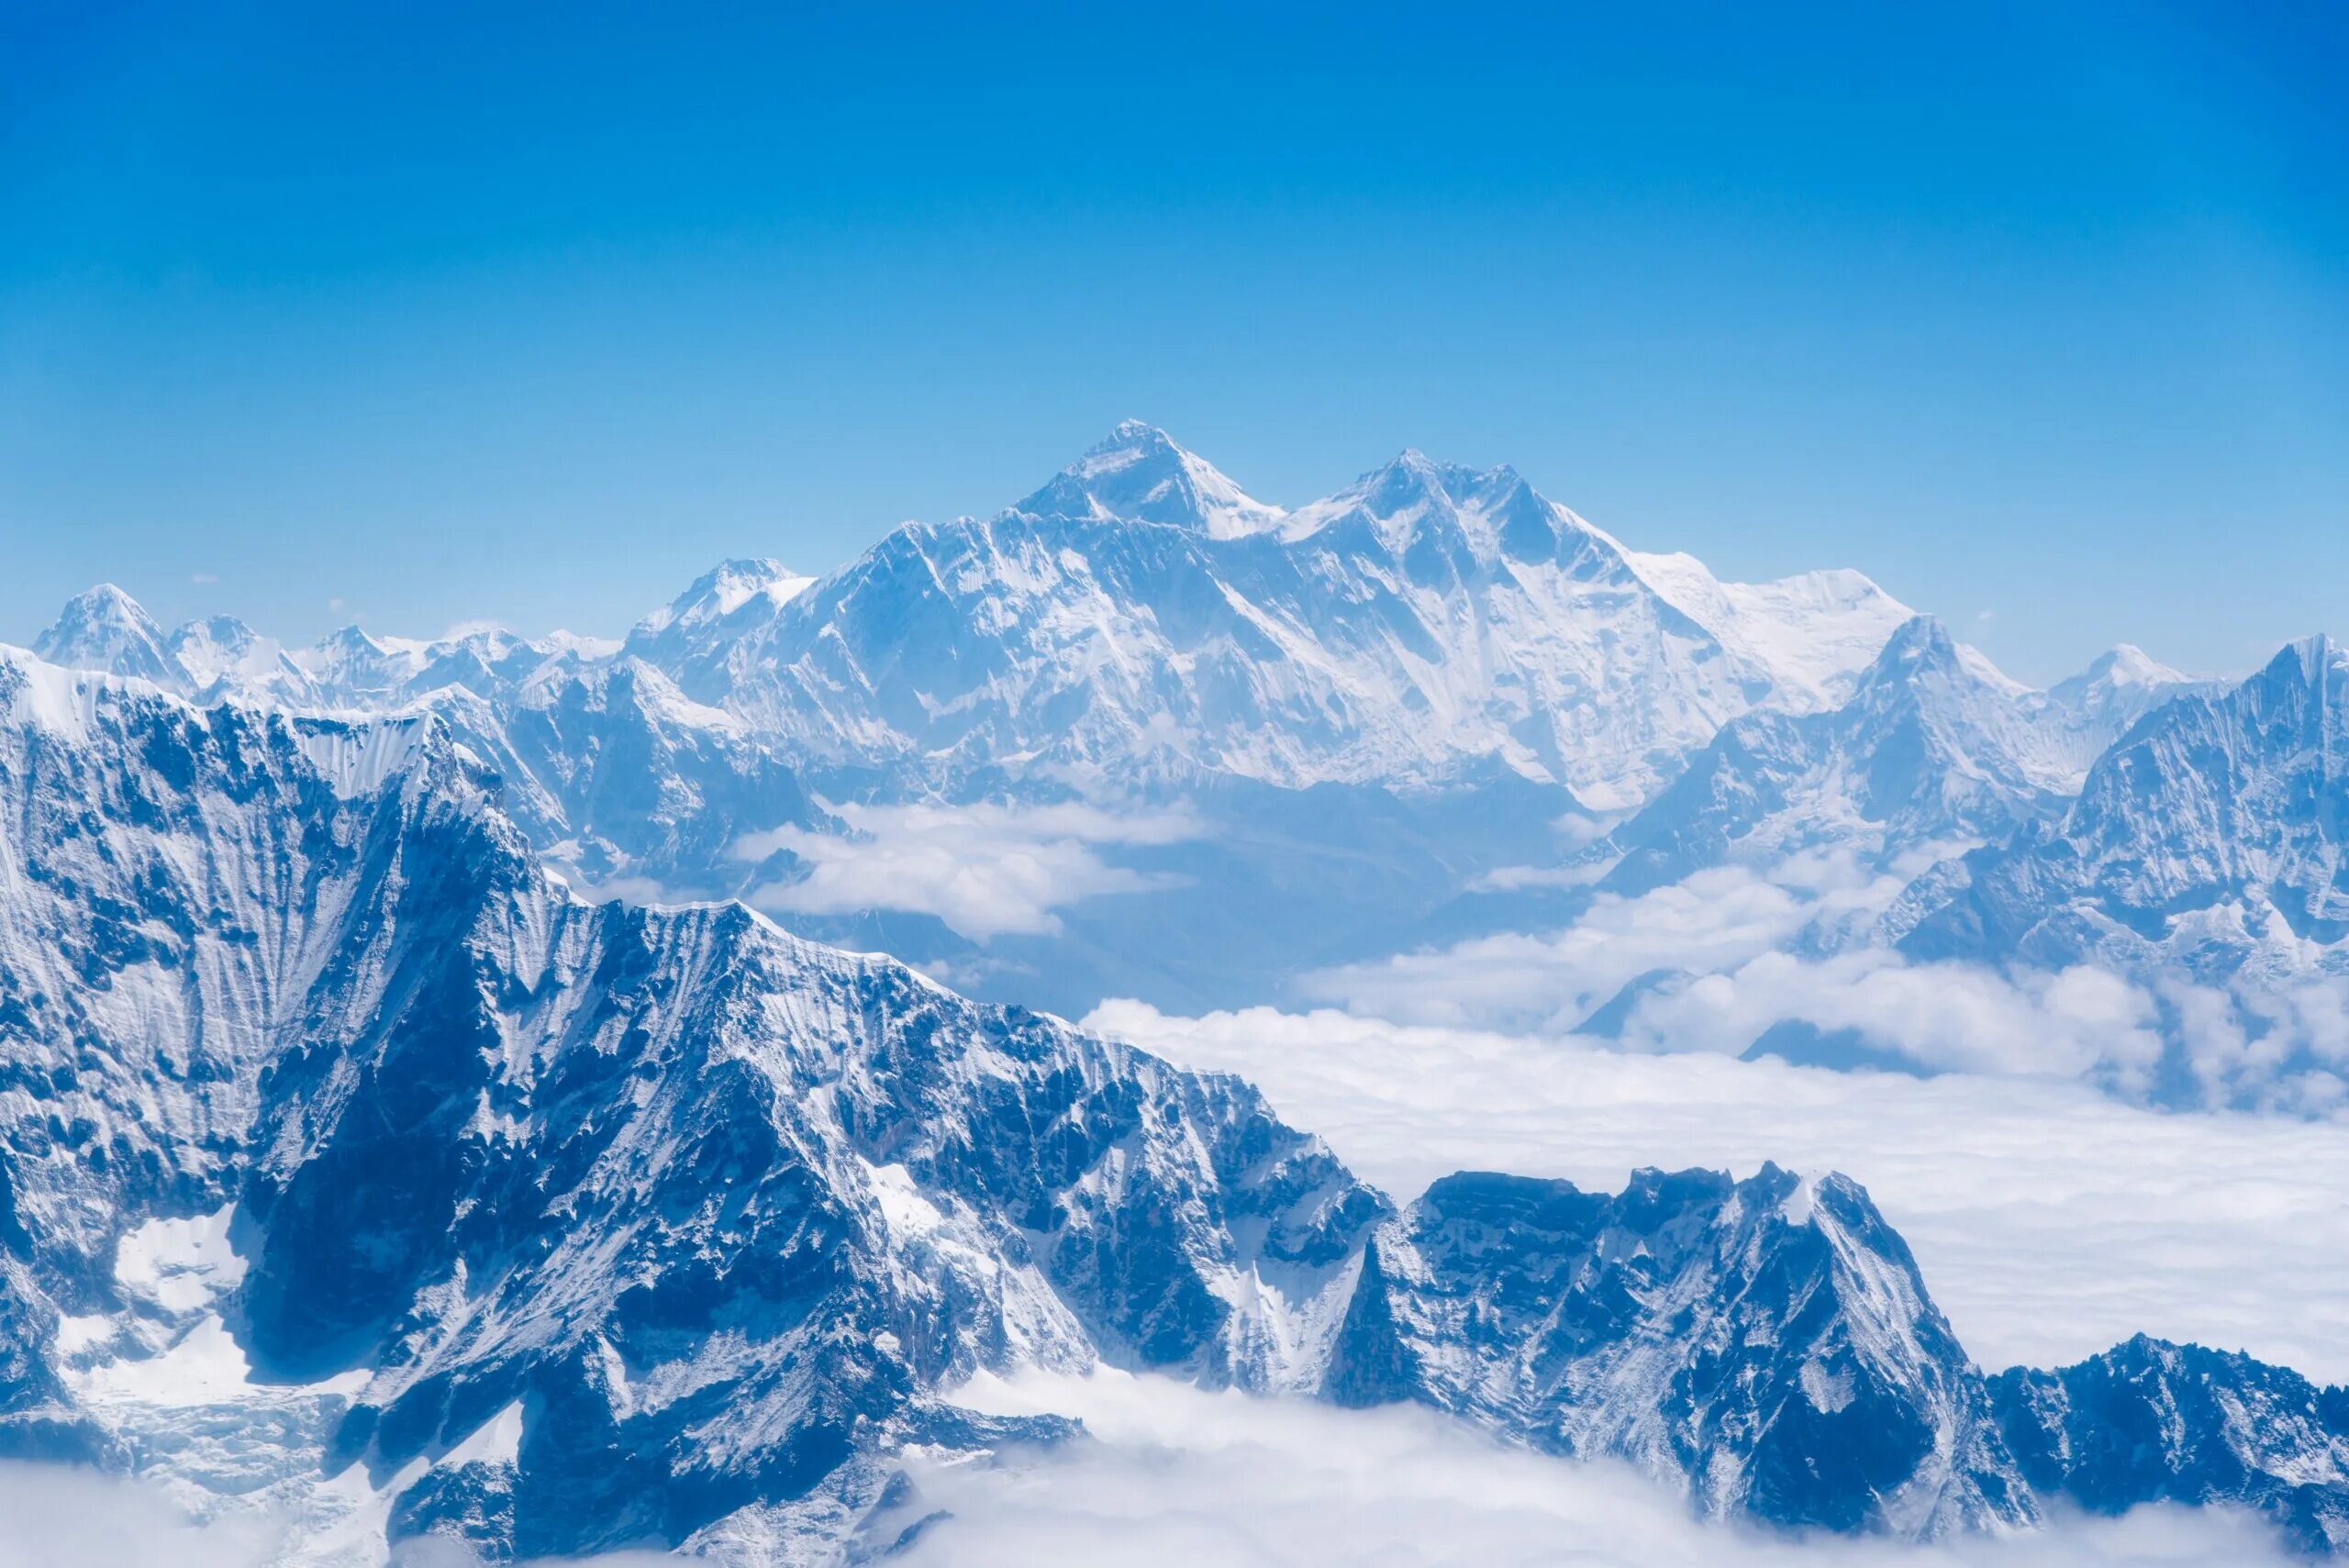 Mount everest is high in the world. Джомолунгма (Гималаи) - 8848. Гора Эверест 8848 м. Баннер горы. Заснеженные горы с высоты.